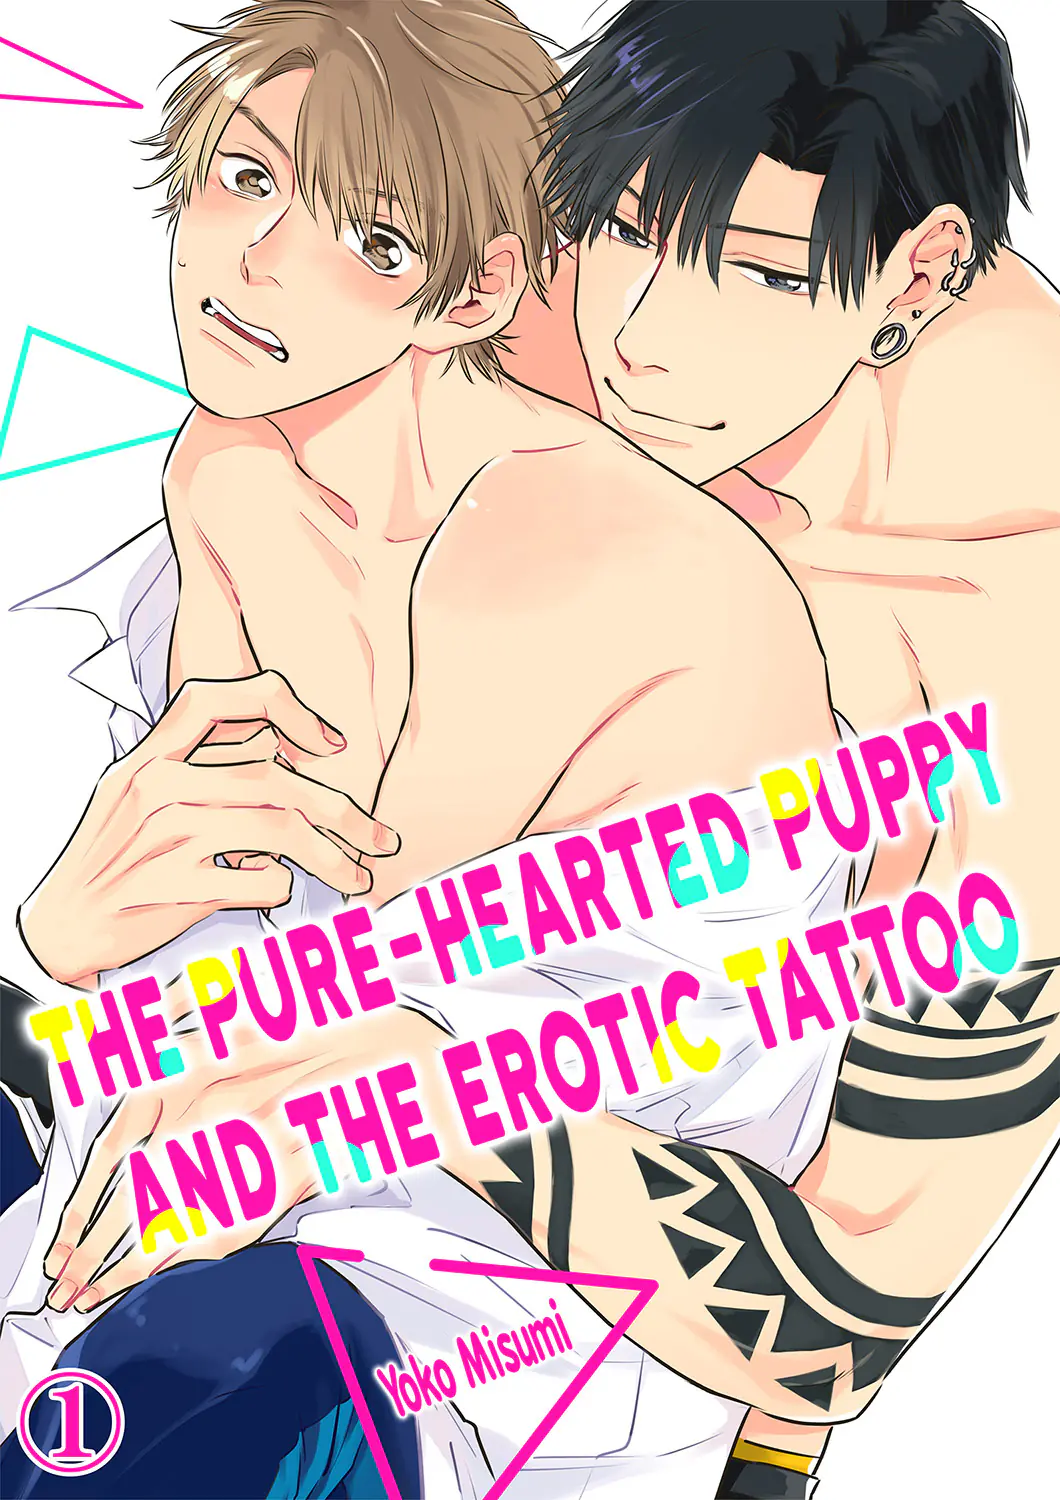 Erotic bl manga